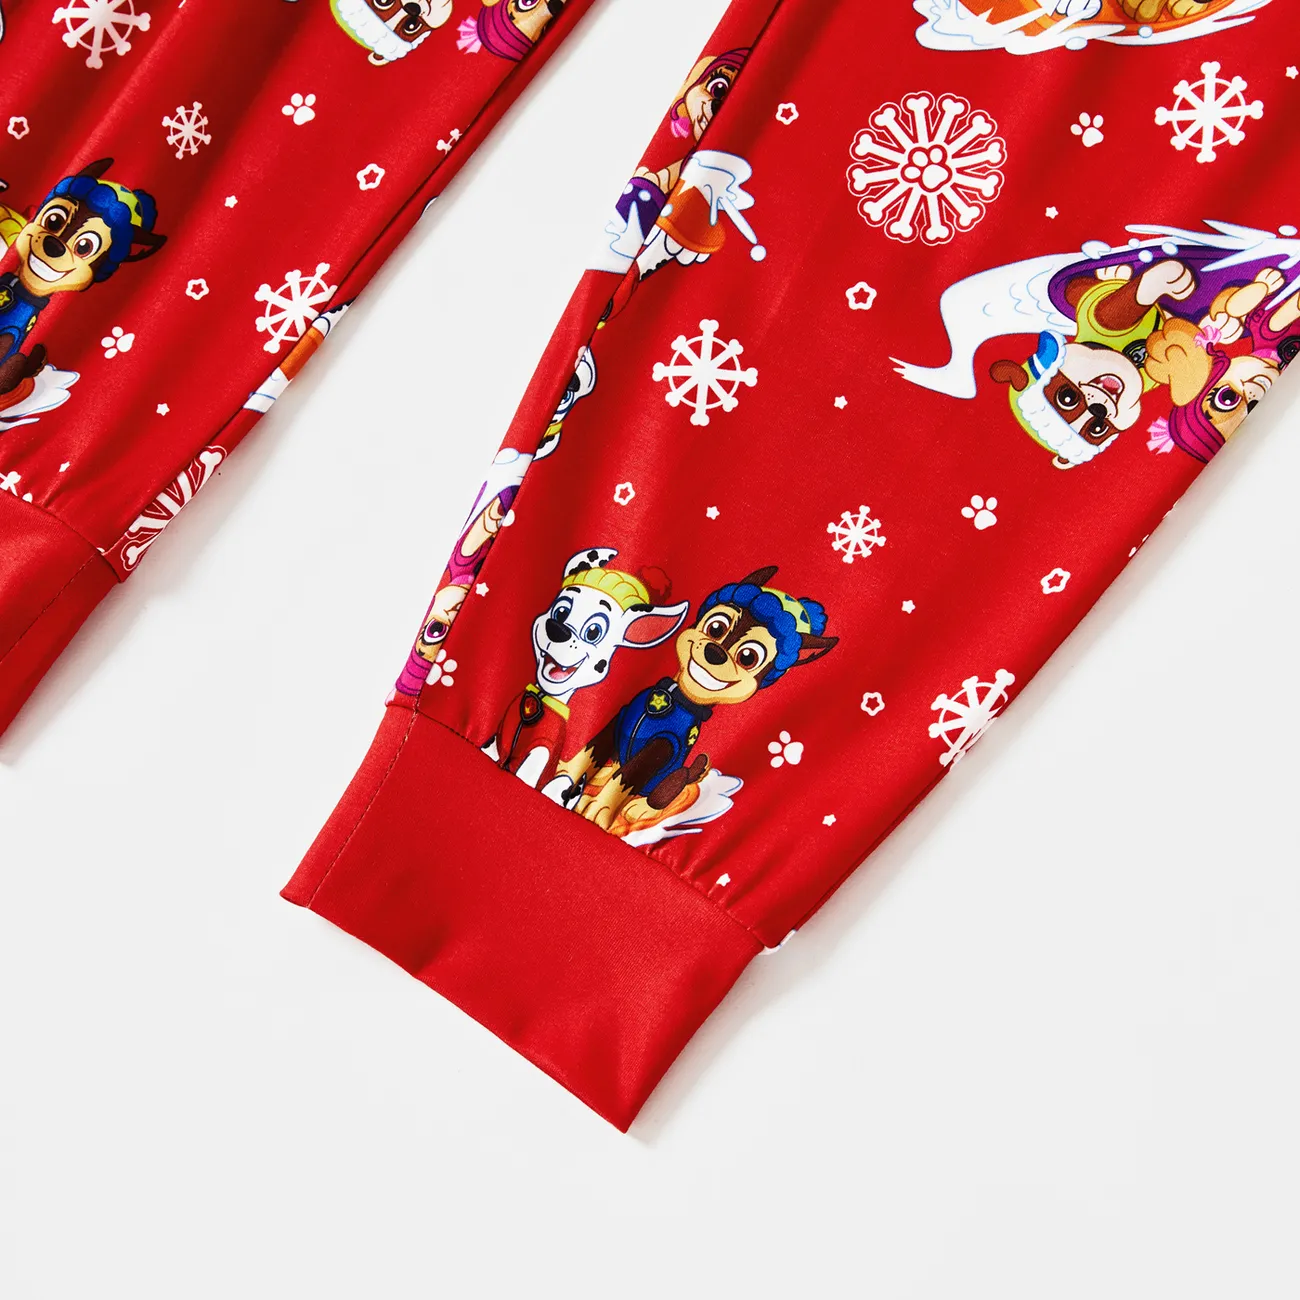 PAW Patrol Big Graphic Christmas Family Matching Pajamas Sets(Flame Resistant) Multi-color big image 1